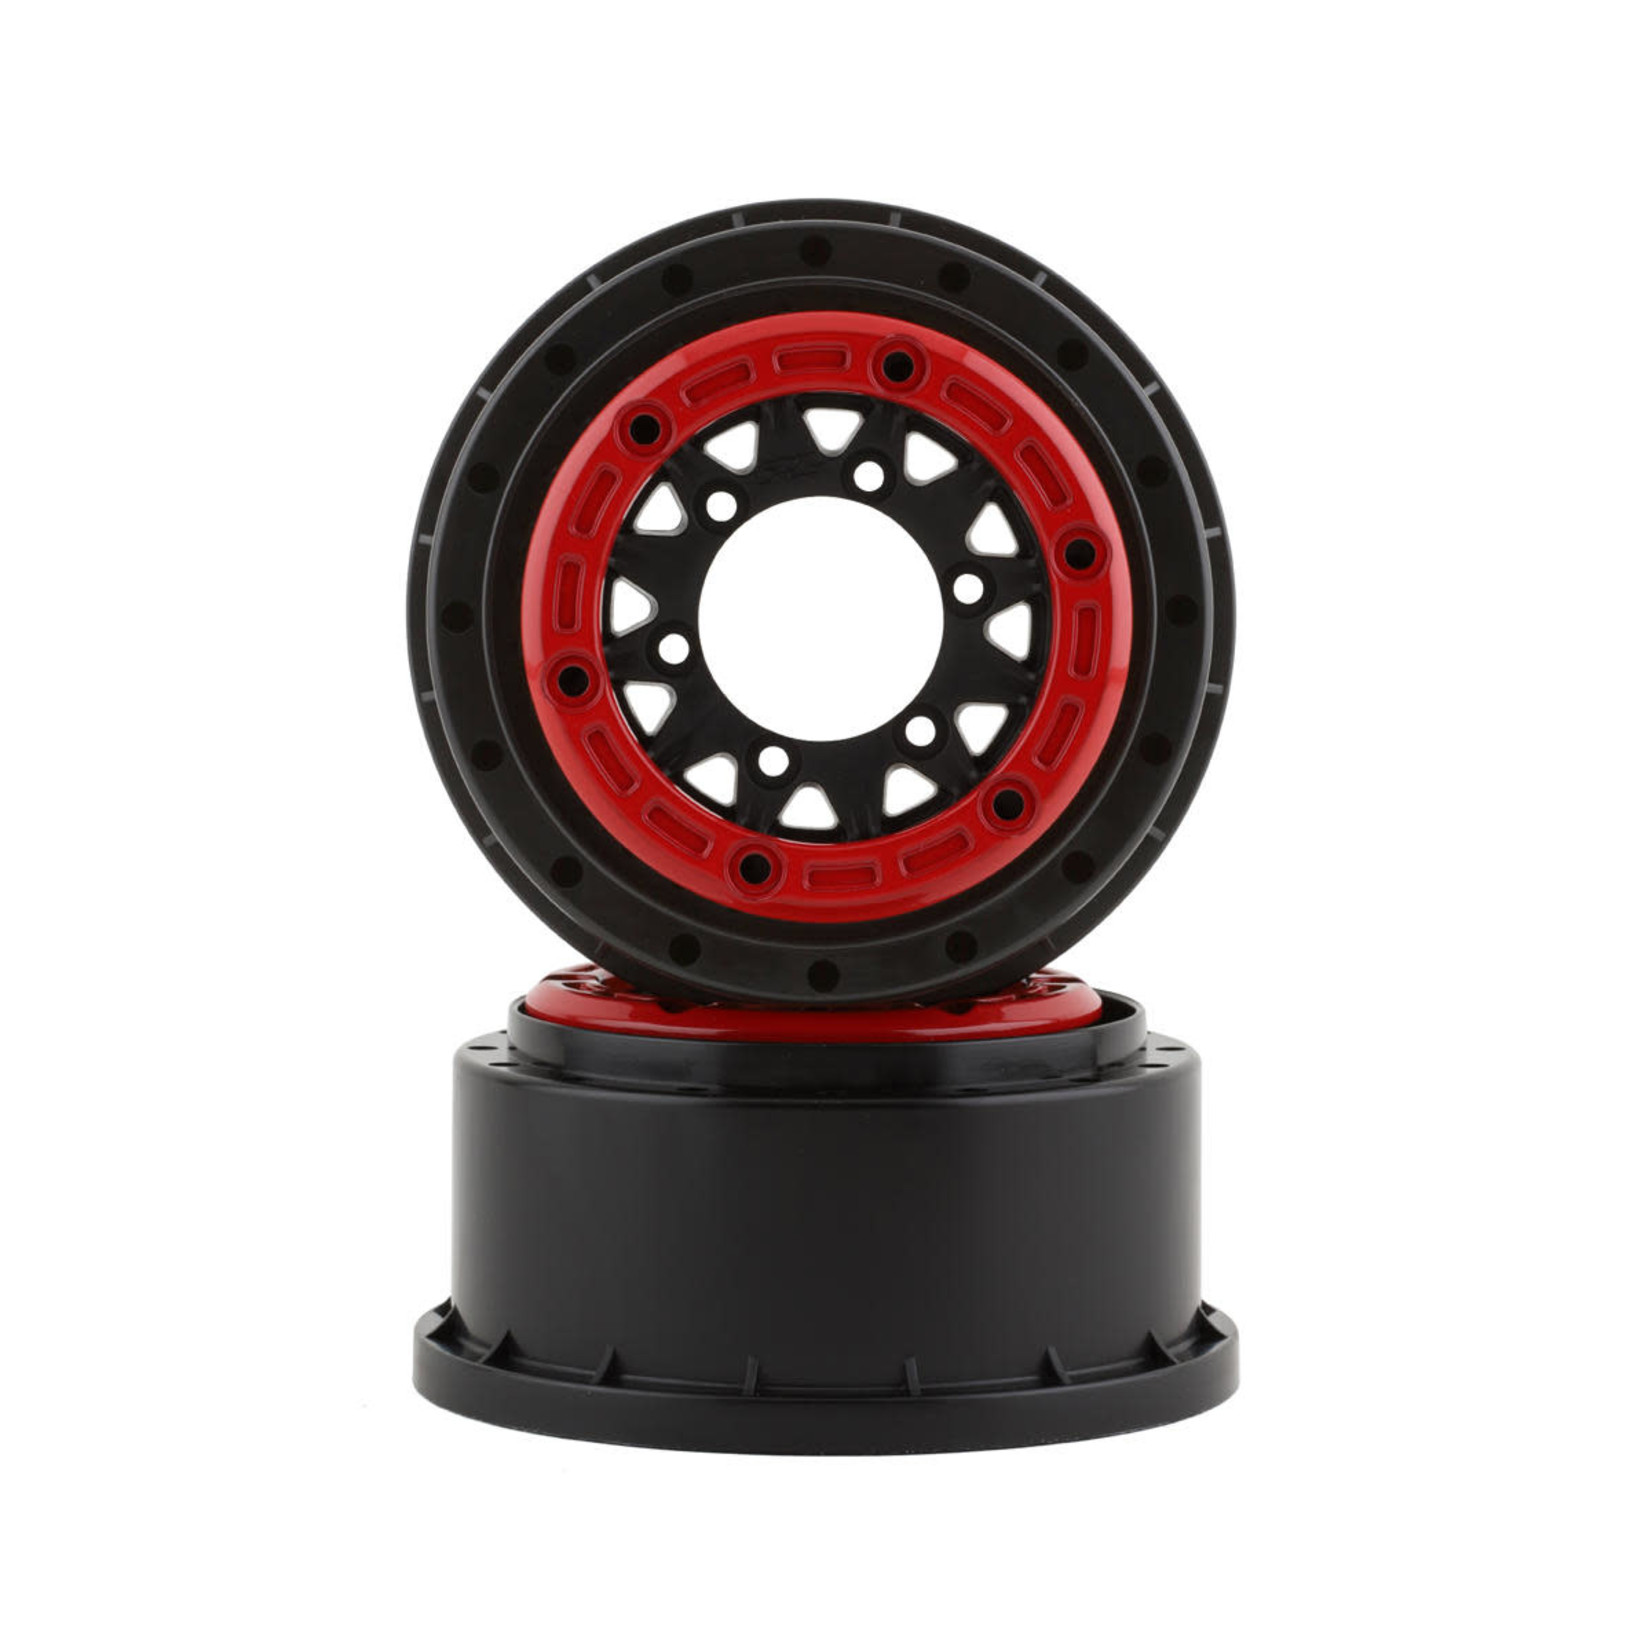 Pro-Line Pro-Line Raid Bead-Loc 2.2"/3.0" Short Course Wheels (Red/Black) (2) w/12mm & 14mm Removable Hex #2811-04